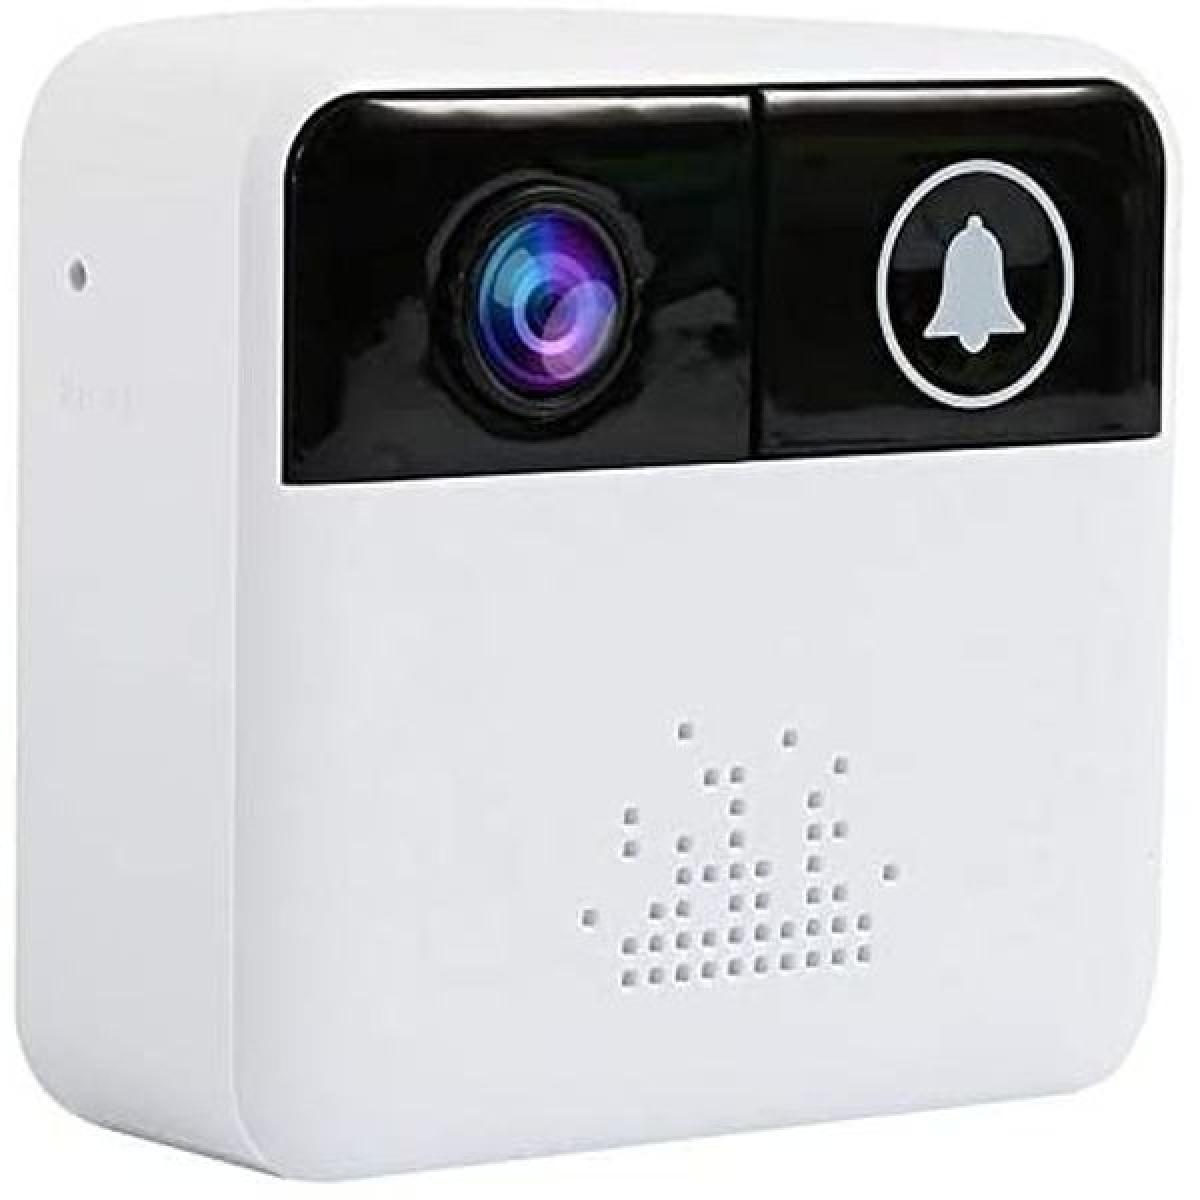 Totalcadeau - Sonnette interphone camera wifi IP Waterproof à vision infrarouge - Autres accessoires smartphone